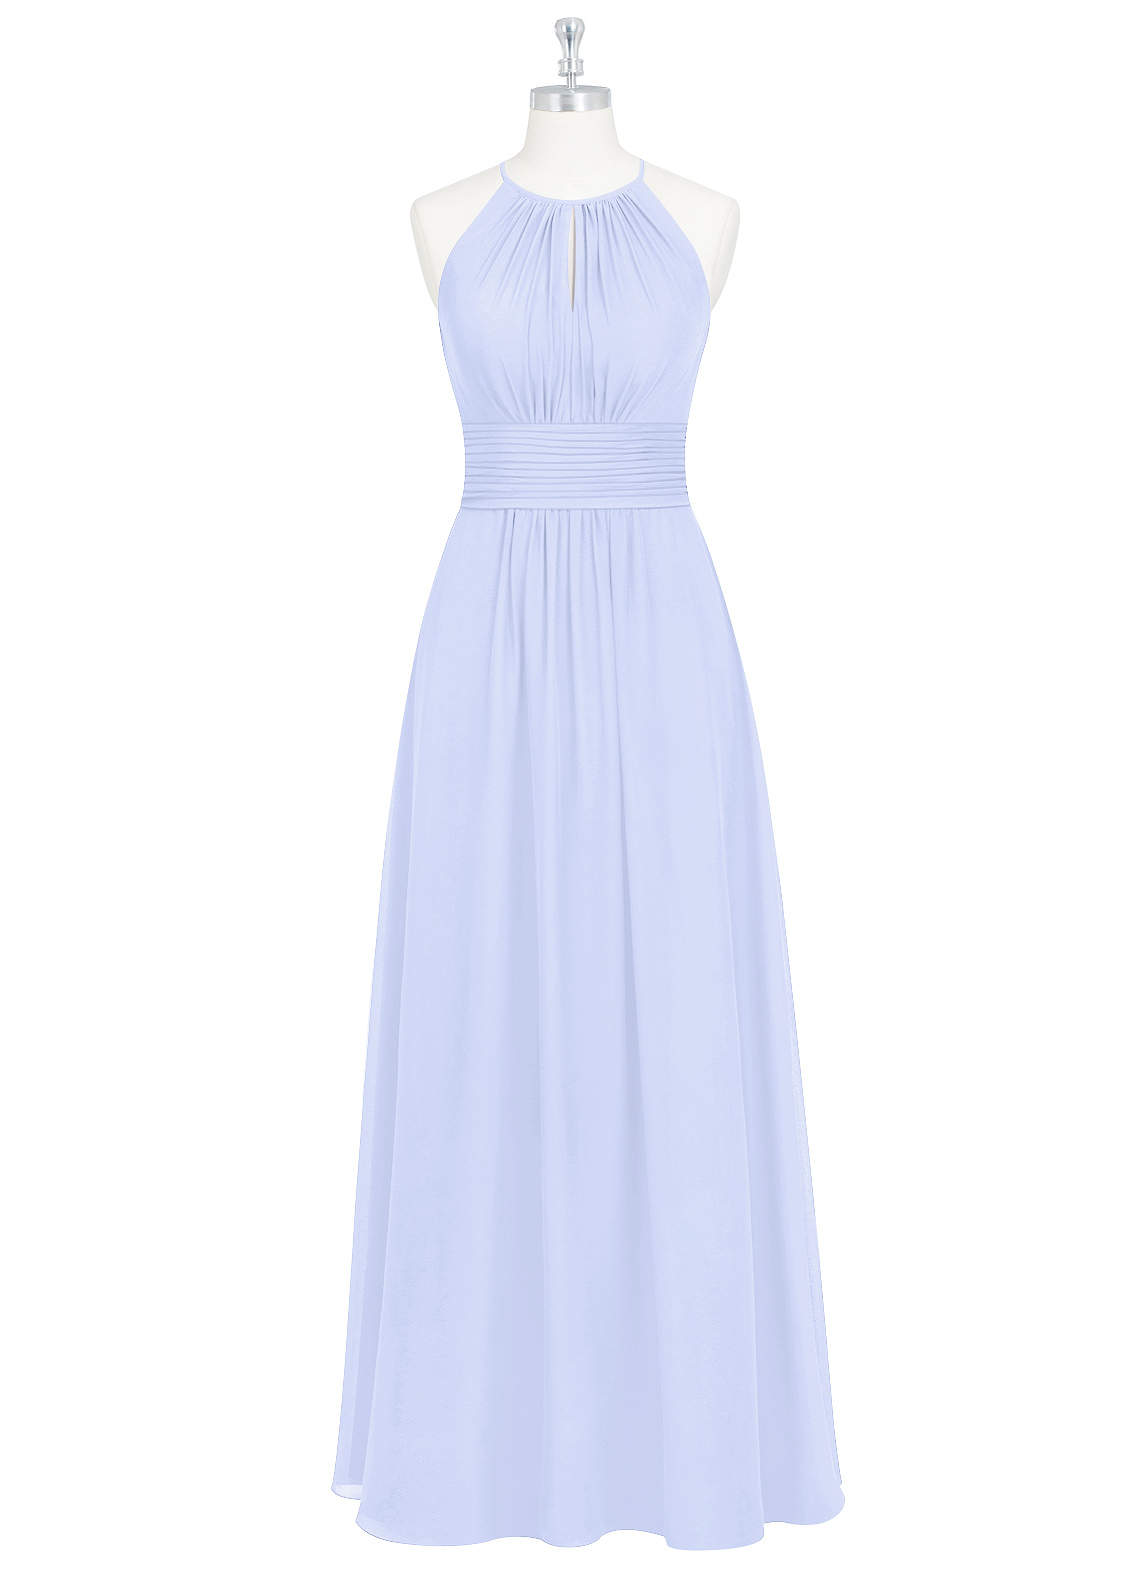 Azazie Bonnie Bridesmaid Dresses A-Line Keyhole Ruched Chiffon Floor-Length Dress image1